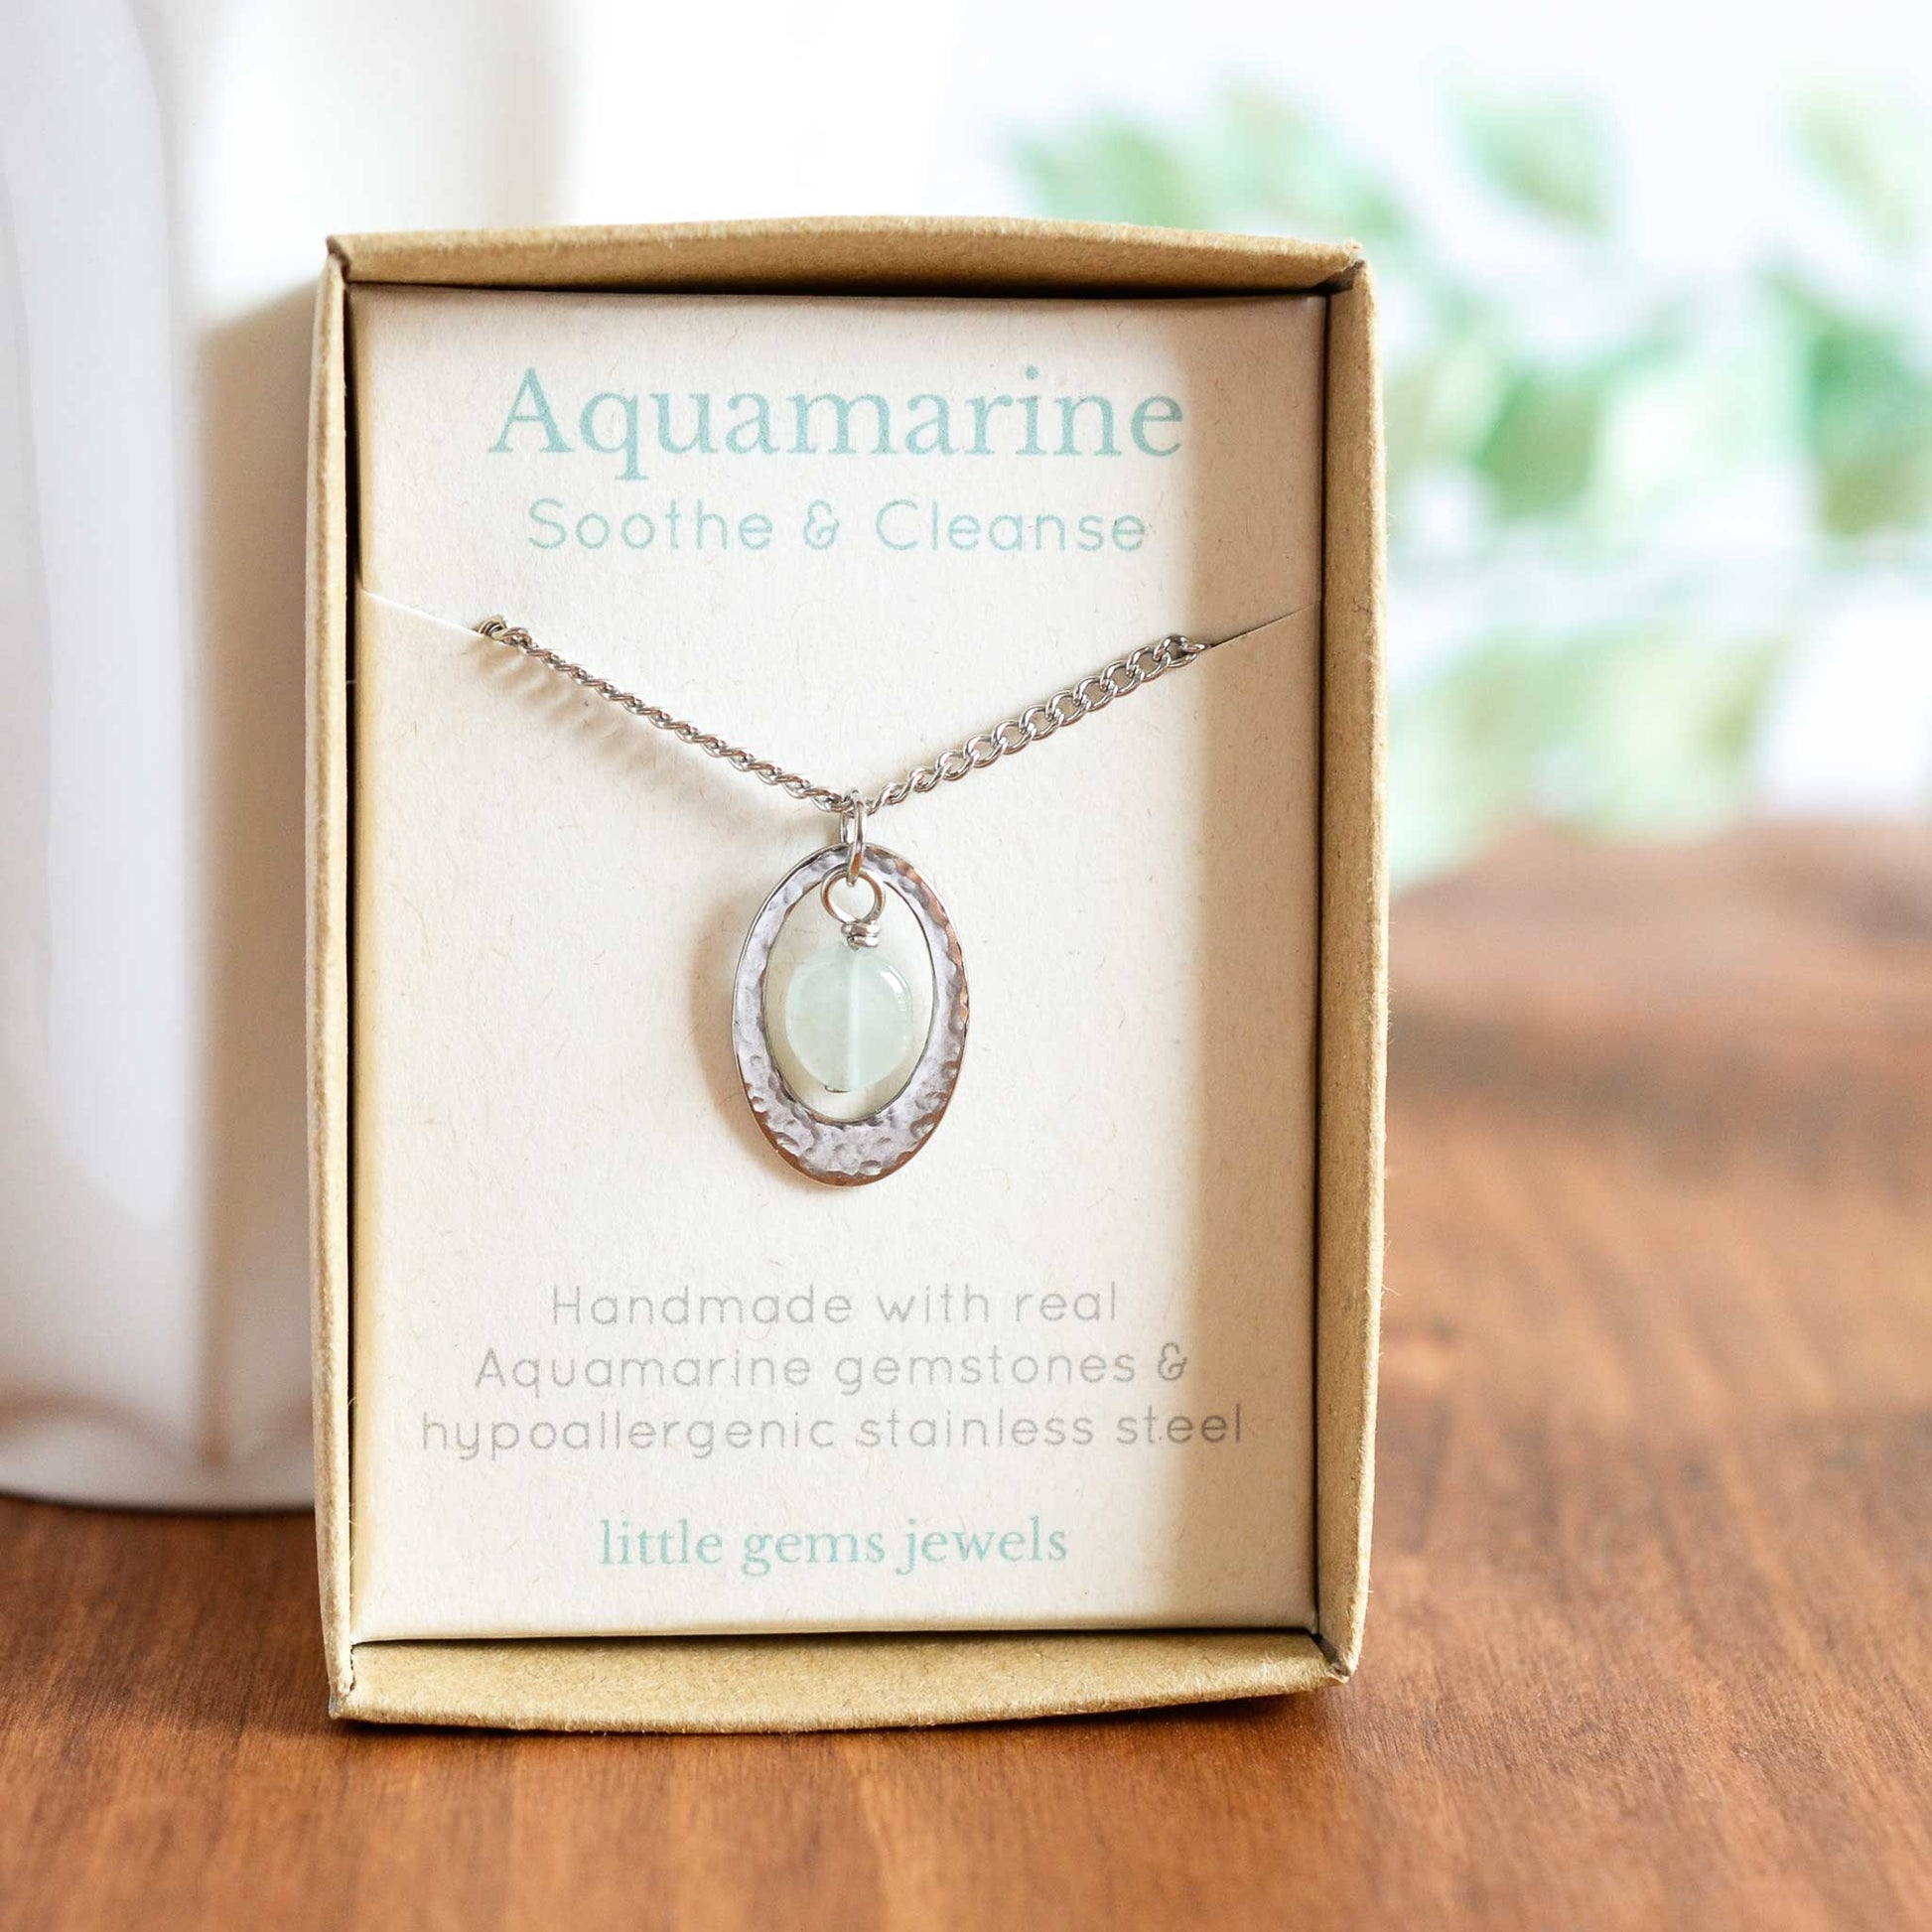 Oval pendant with Aquamarine gemstone in gift box